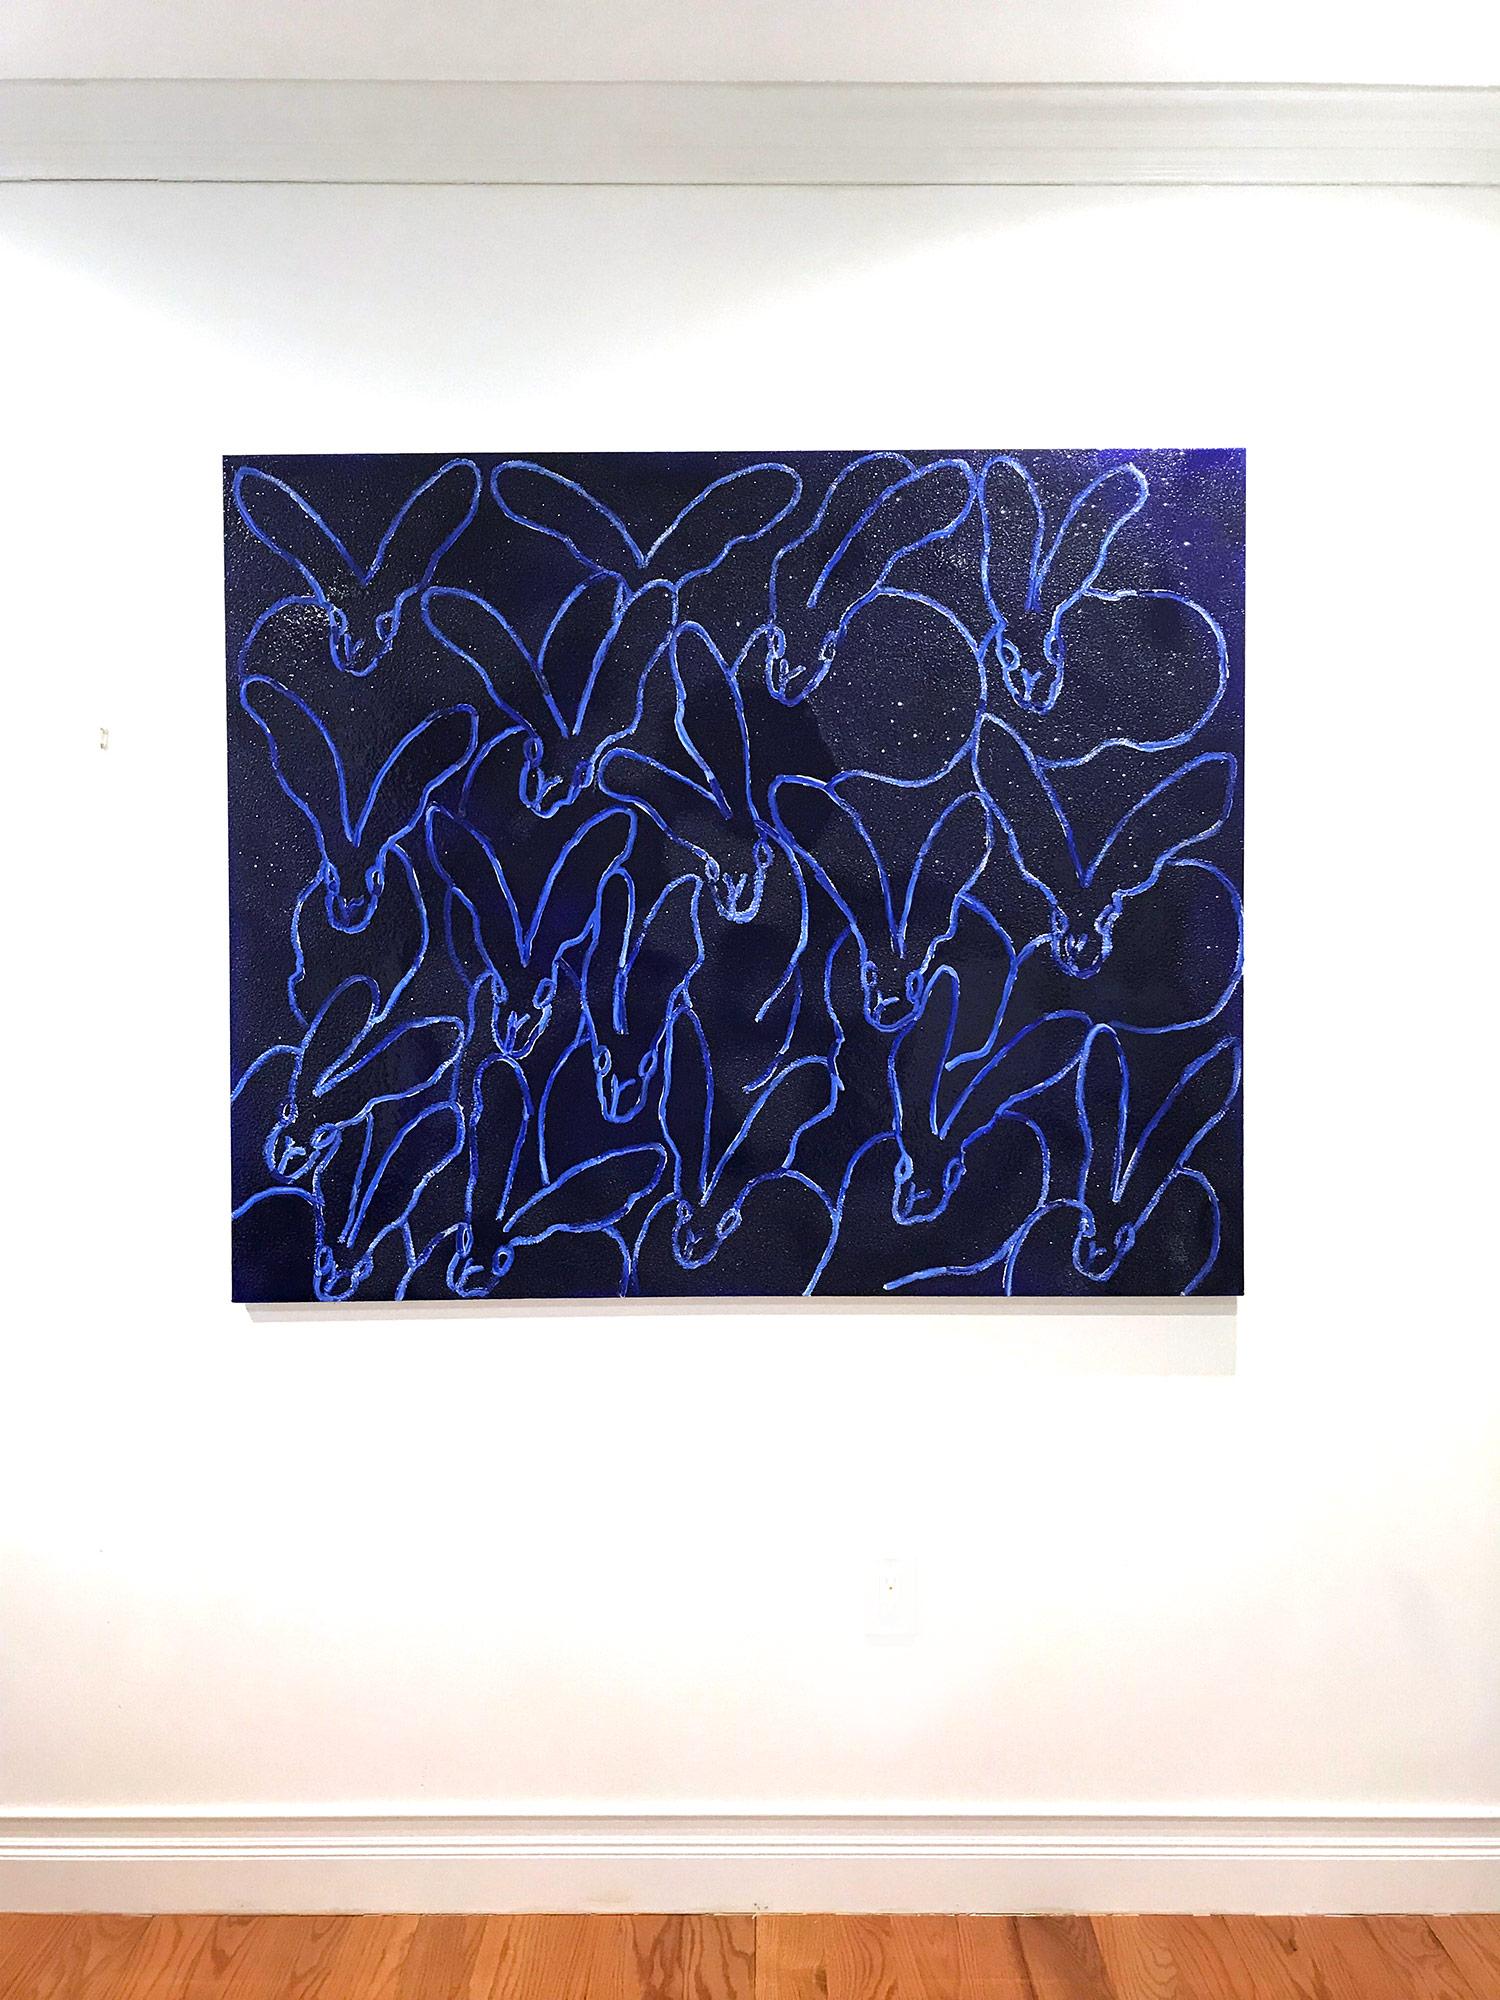 Tanzania Blues (Diamond Dust Bunnies on Ultramarine Blue) Oil Painting on Canvas 6